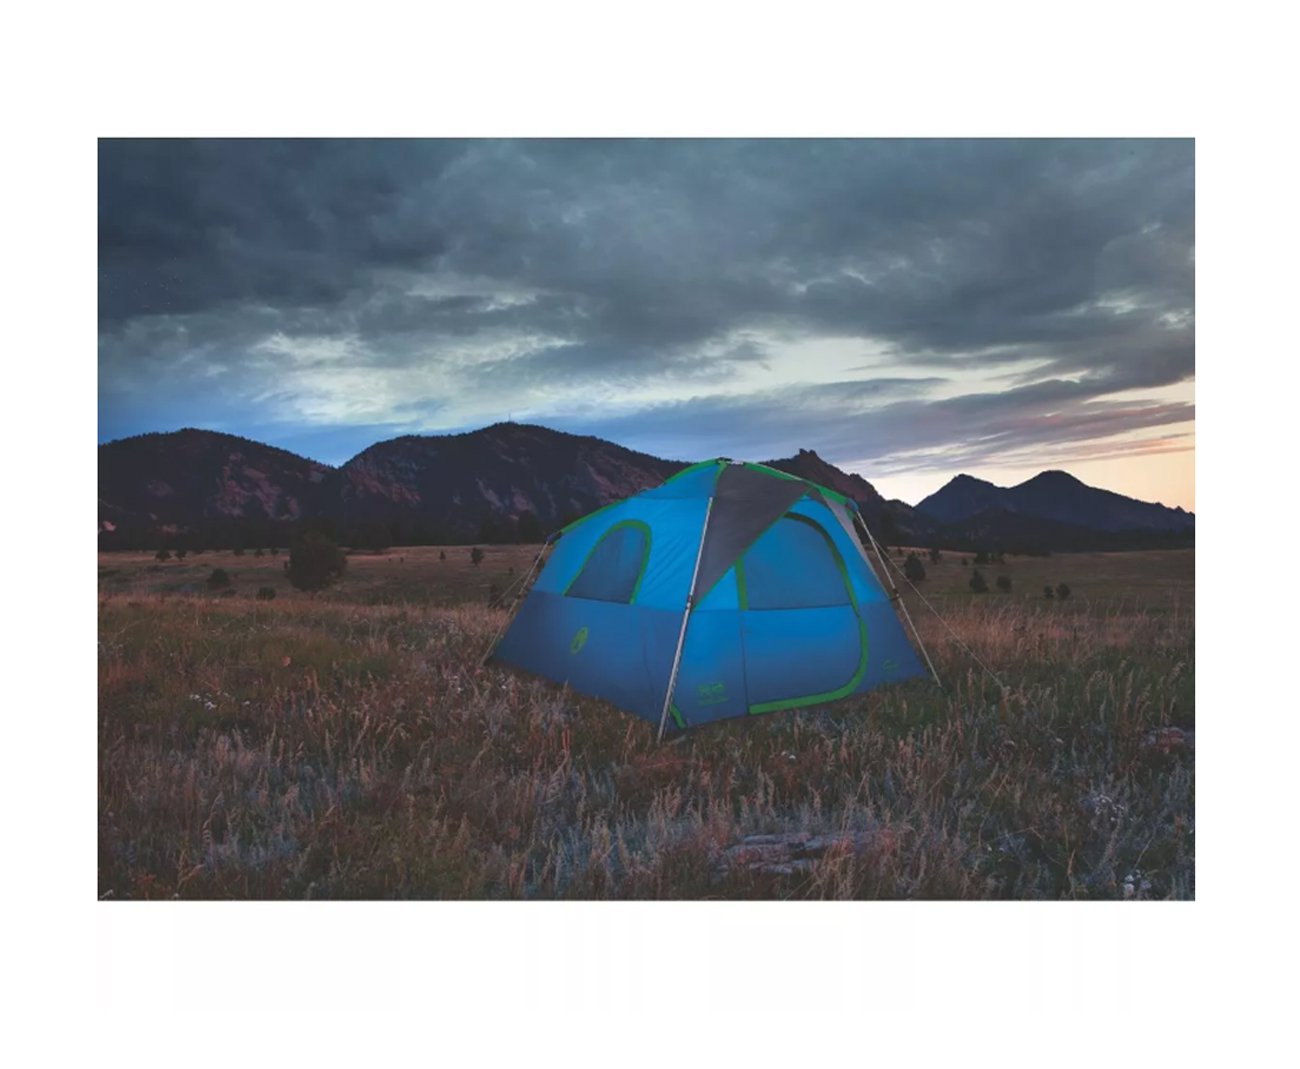 Barraca 4p Signal Mountain Instant Tent 2000mm Coluna De água  - Coleman